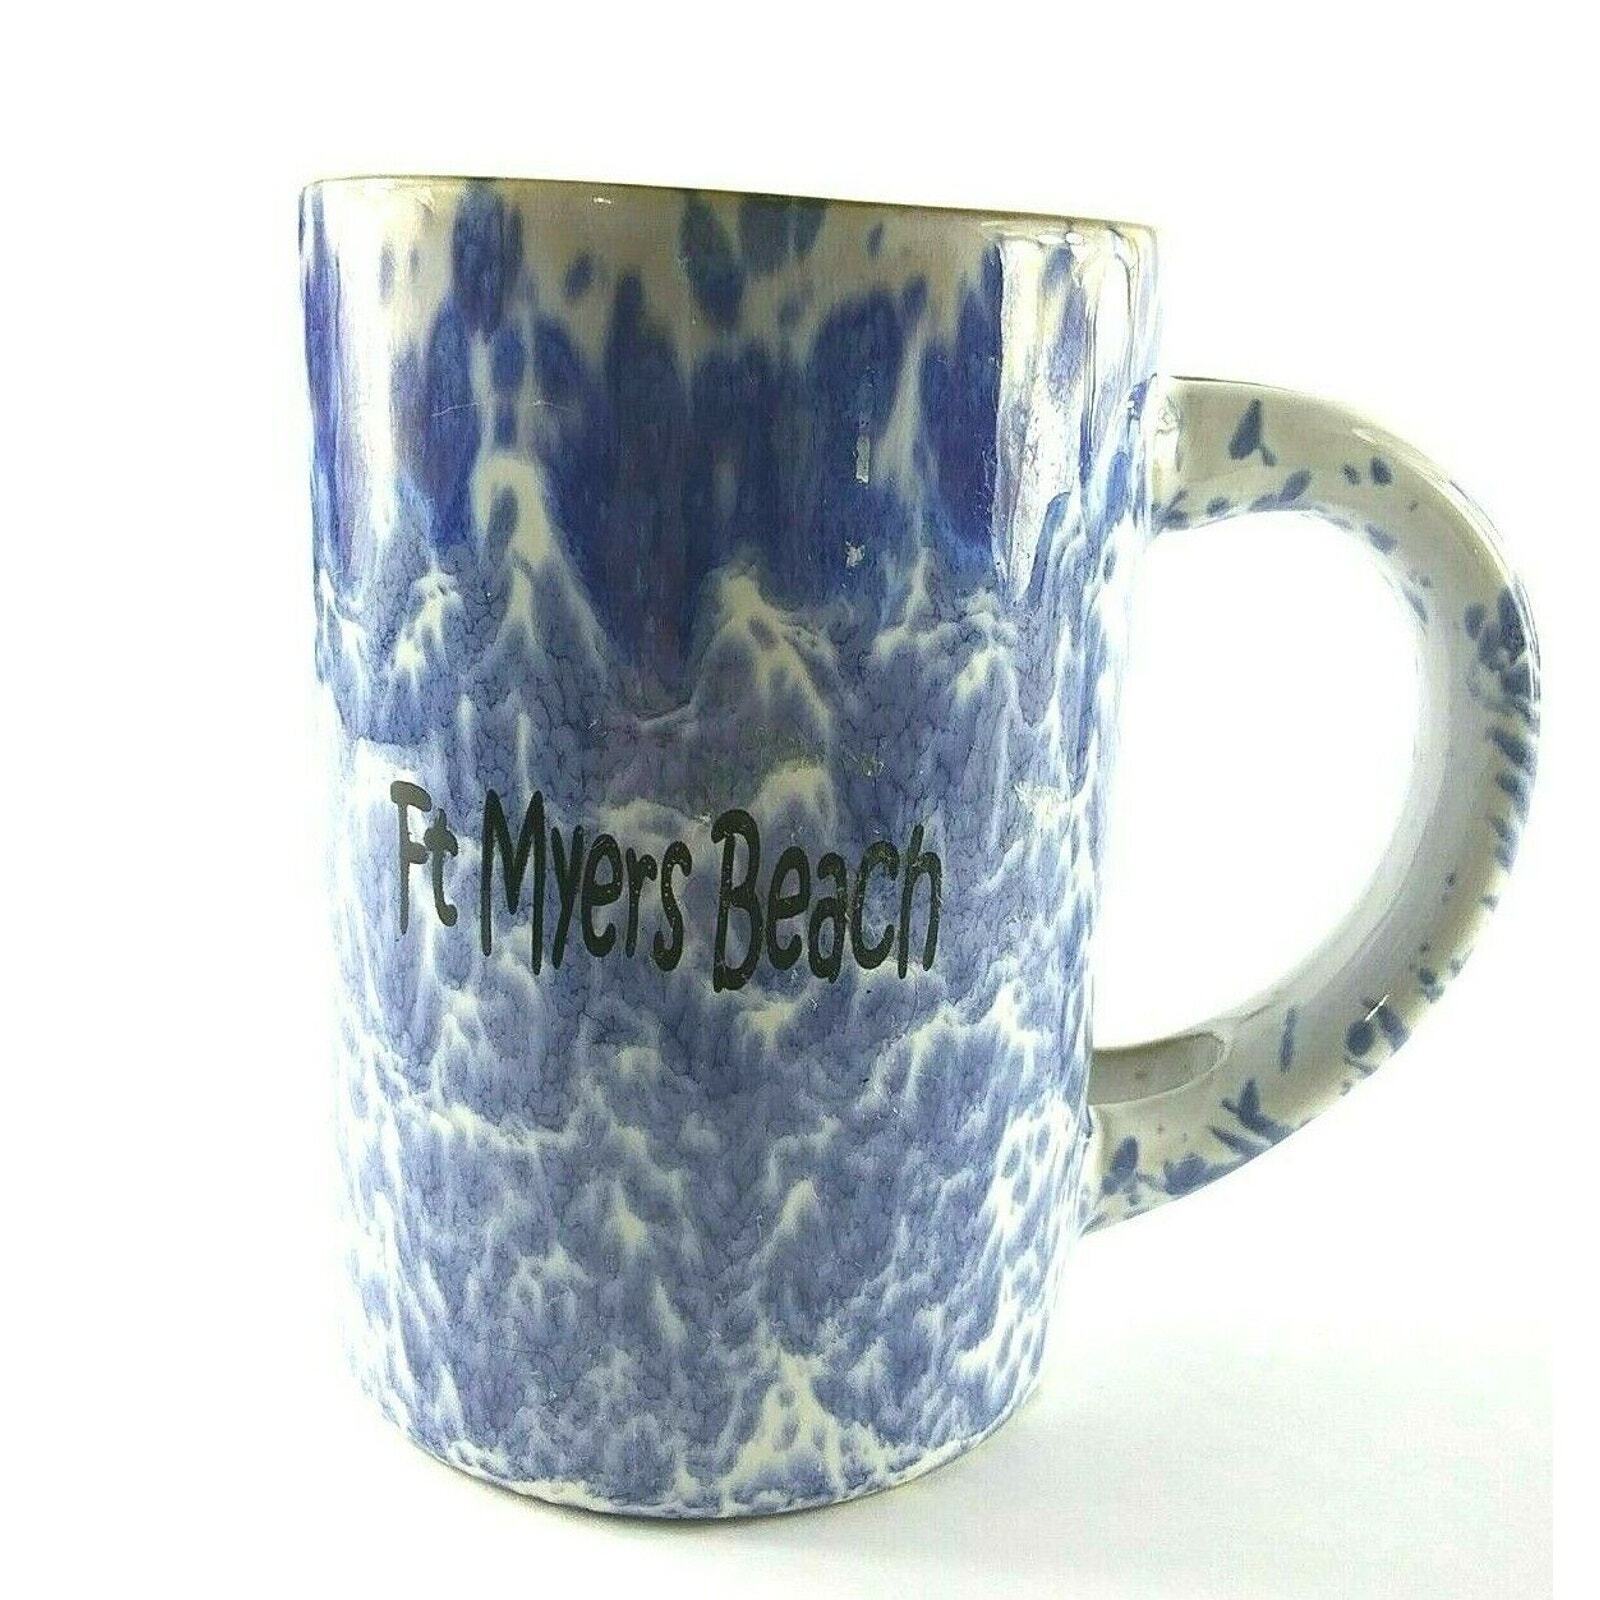 Ft Meyer's Beach Stoneware Coffee Cup Mug Blue White Souvenir